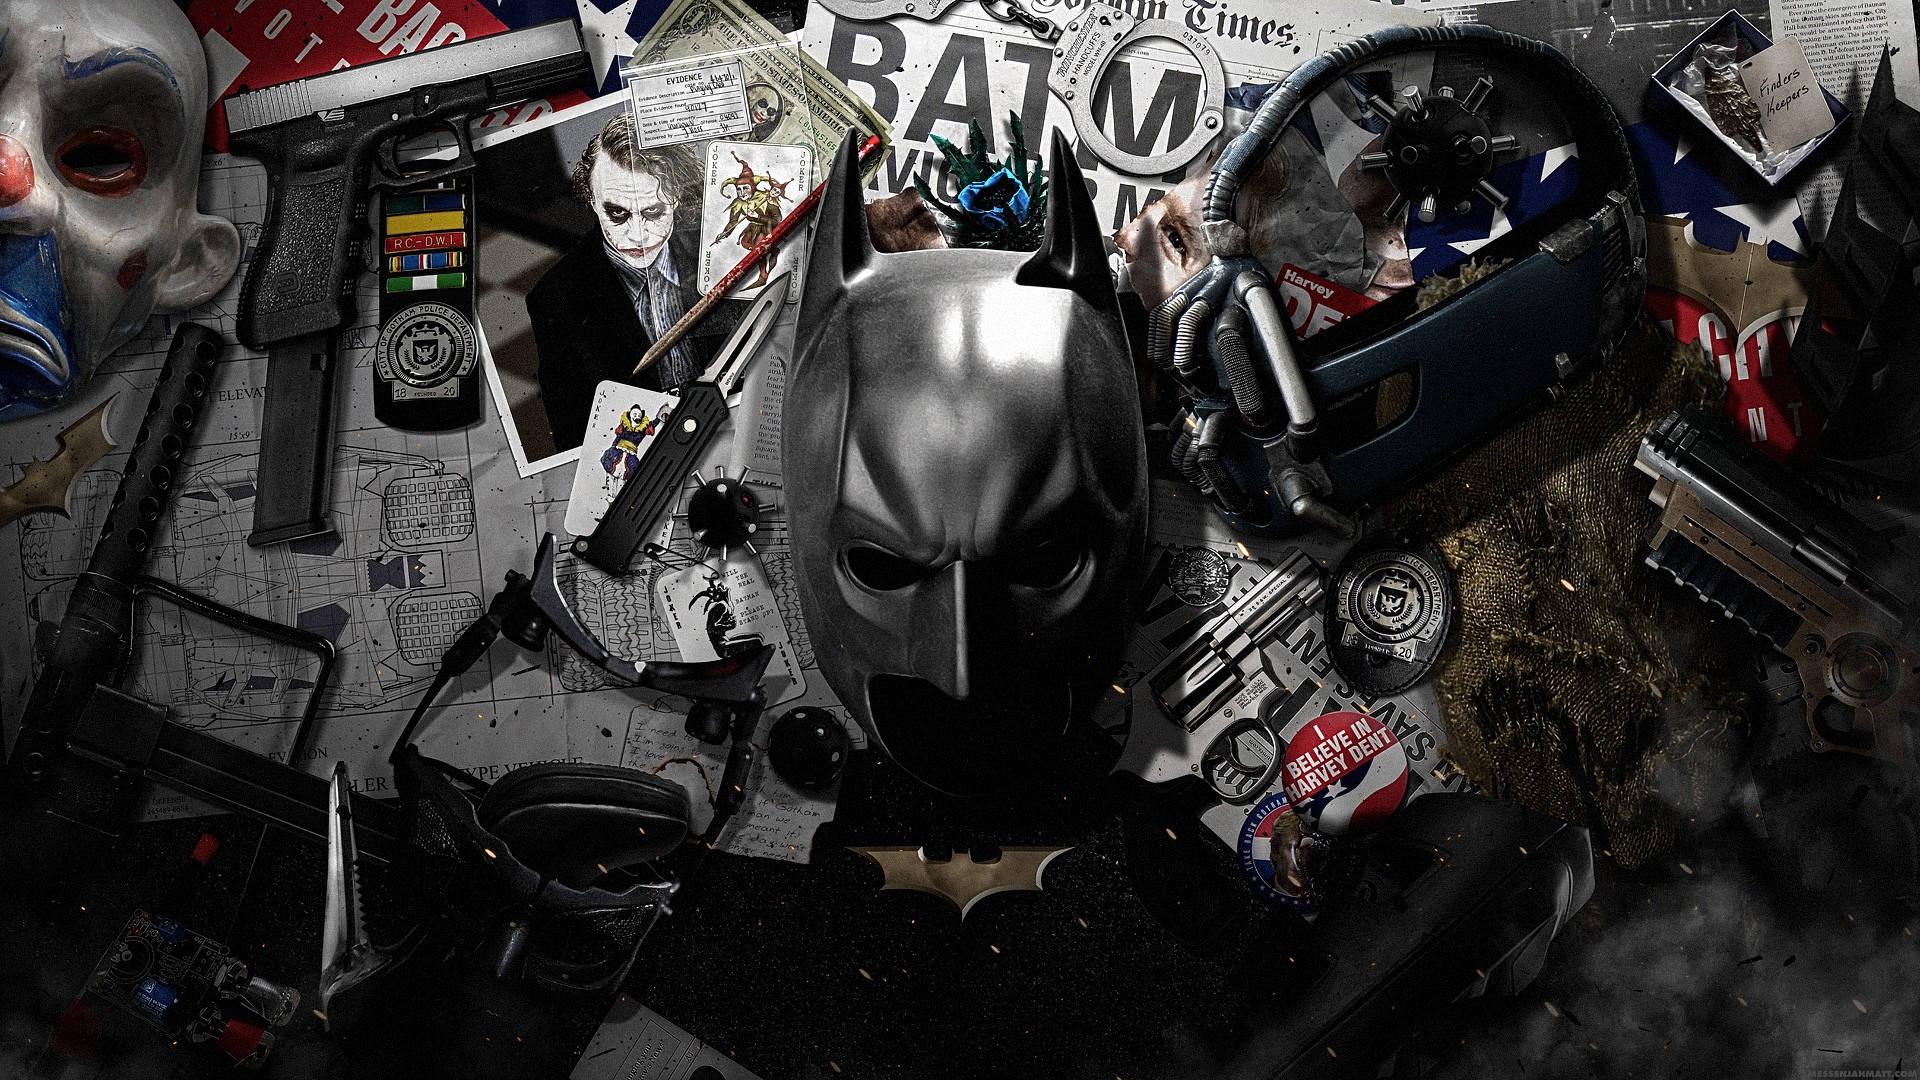 Free The Dark Knight Wallpaper Downloads, [100+] The Dark Knight Wallpapers  for FREE 